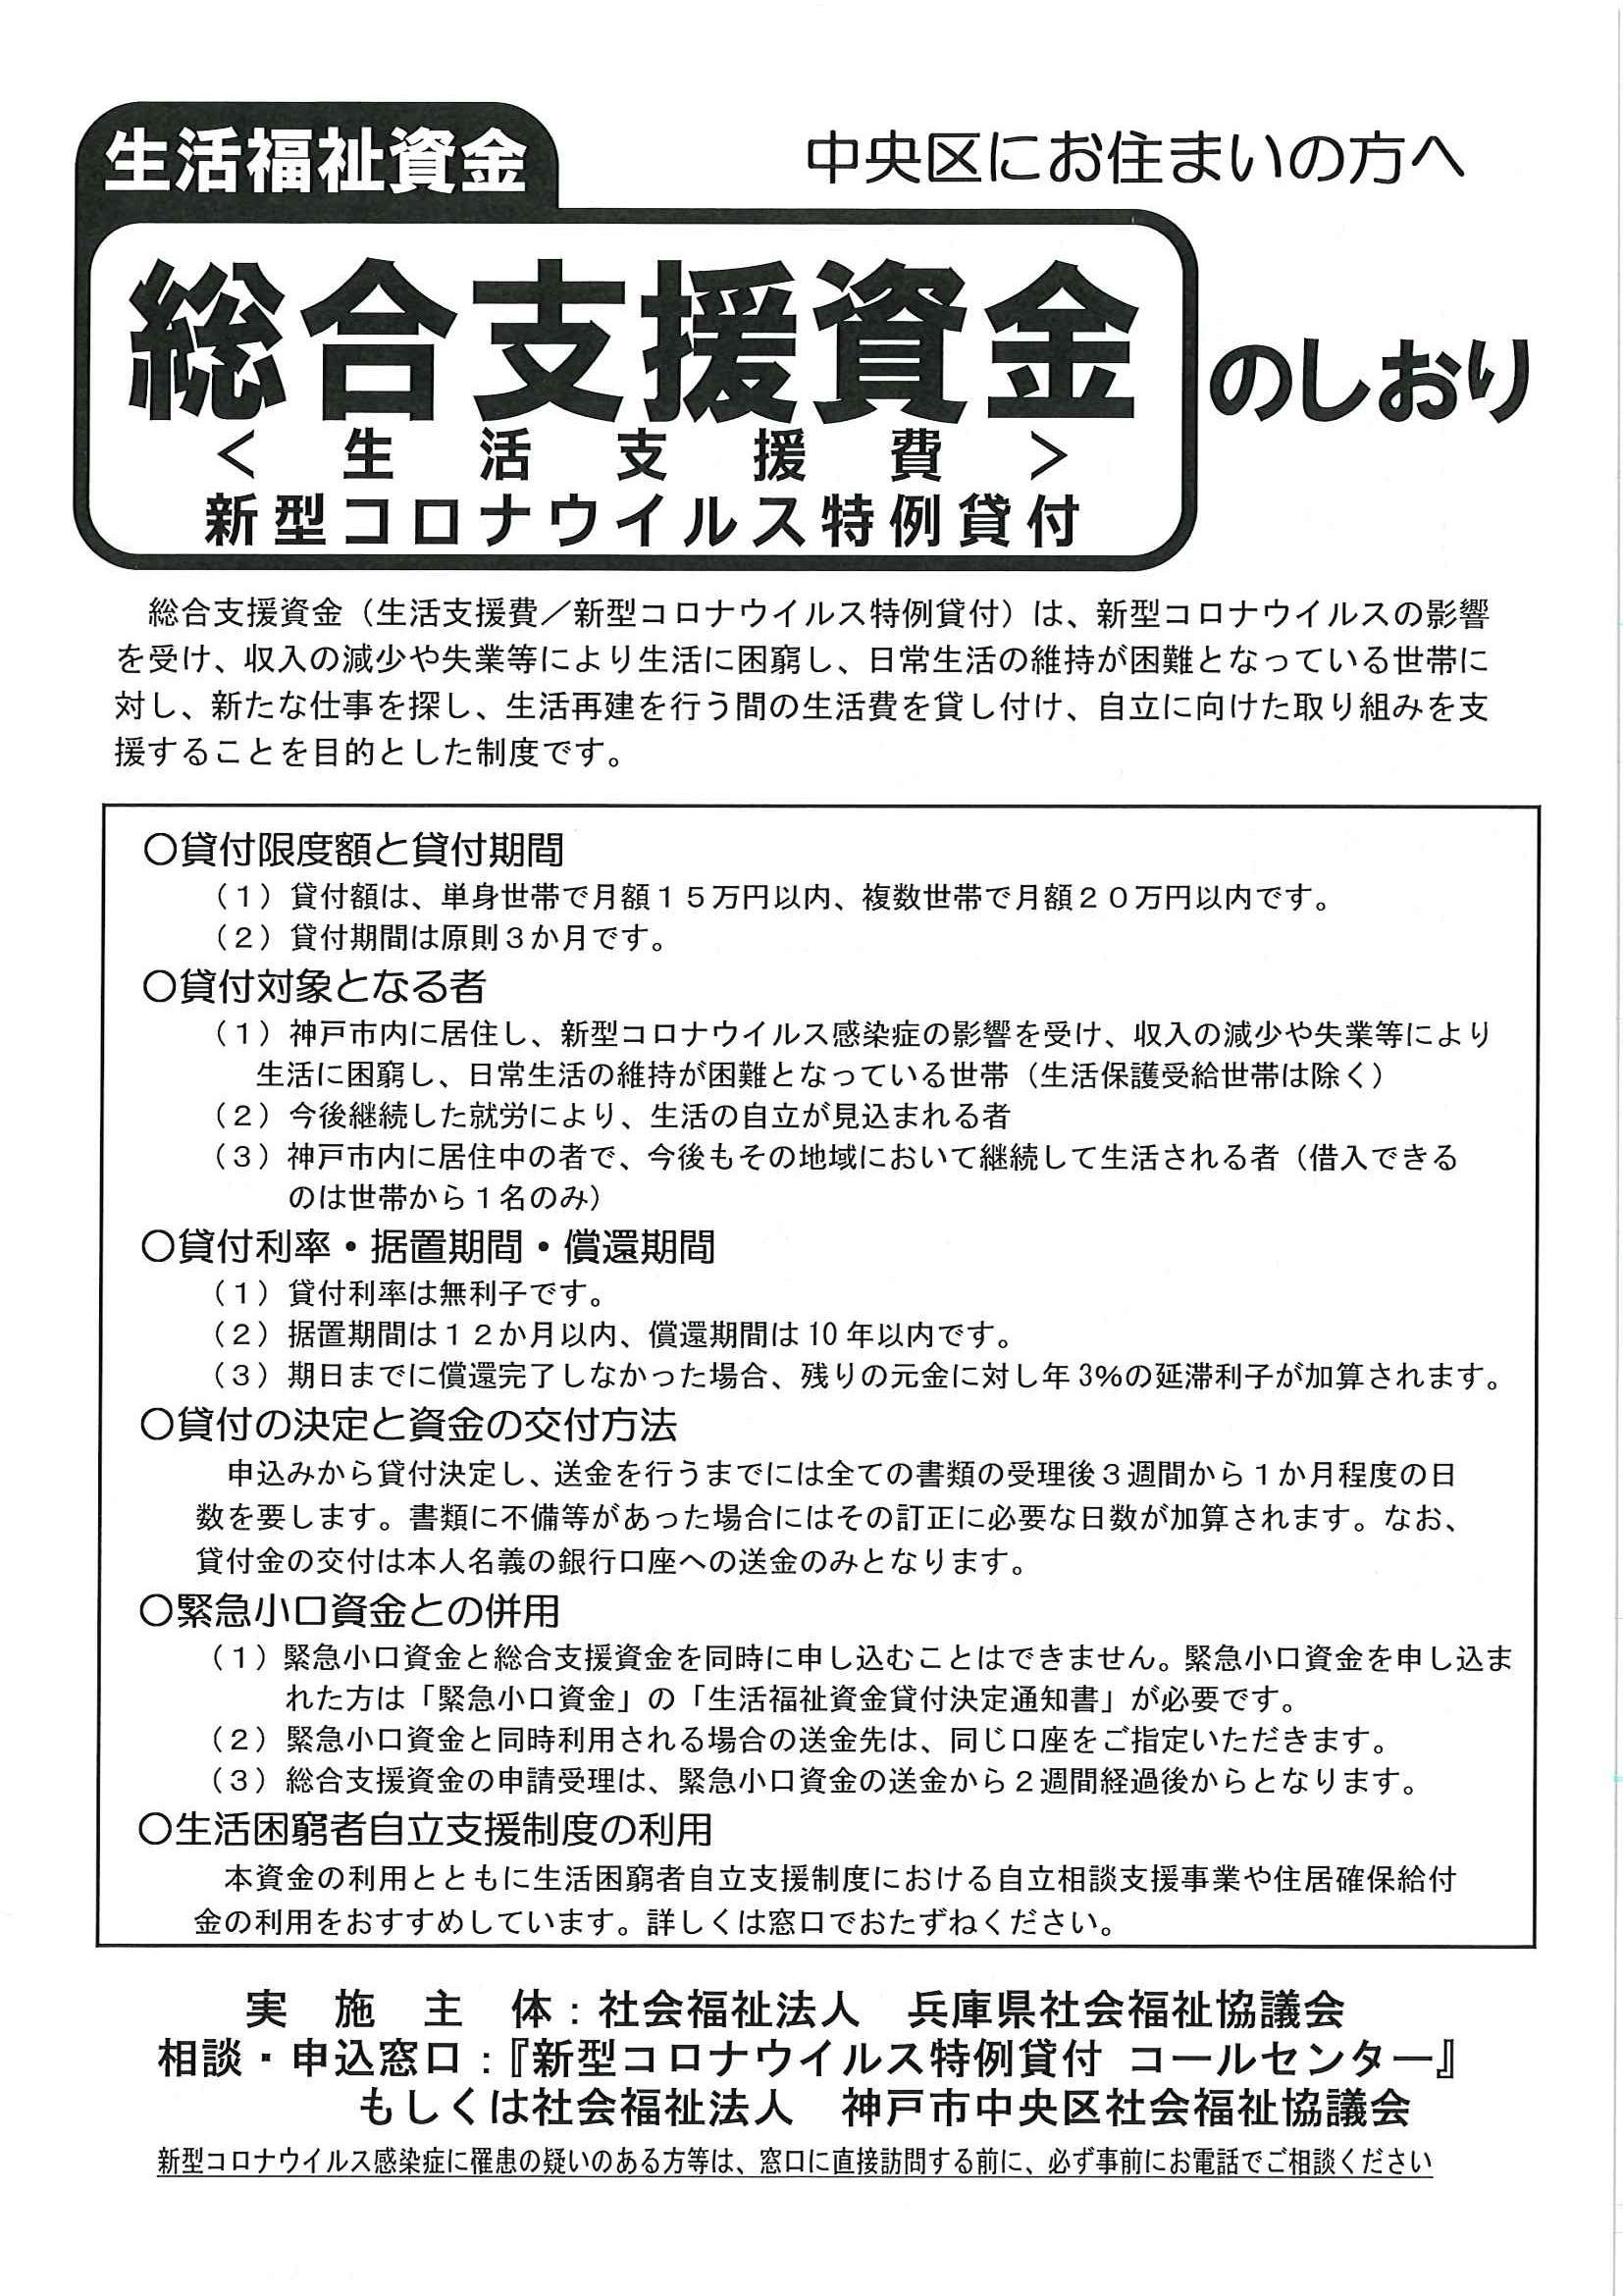 総合支援資金のしおり 5 7改訂版 神戸市中央区社会福祉協議会